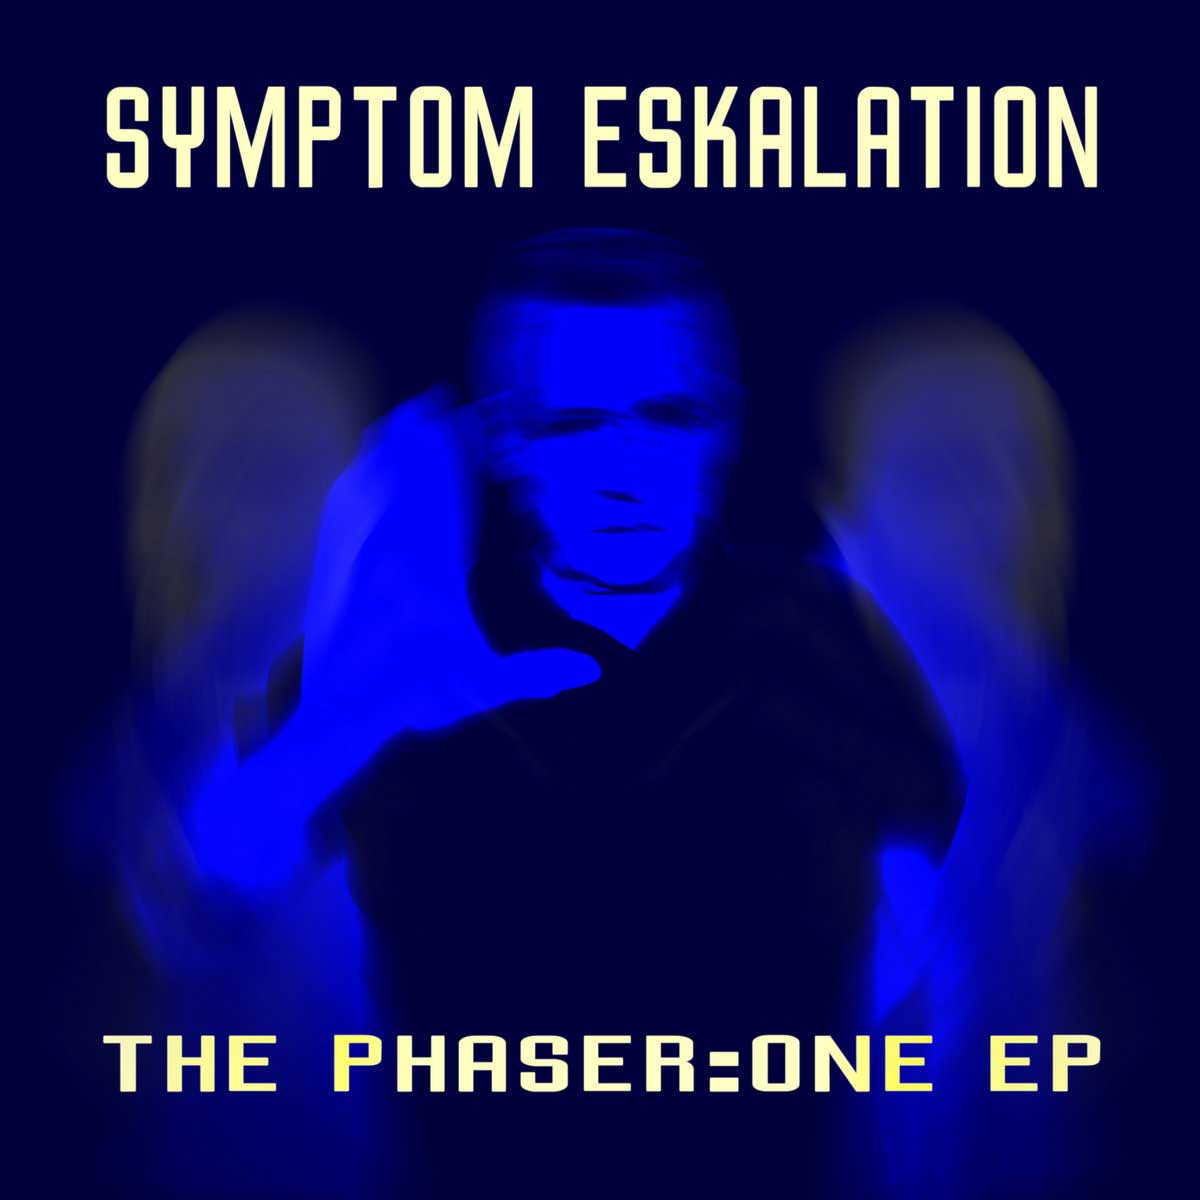 Symptom Eskalation - The Phaser : One EP - BlackGeneration